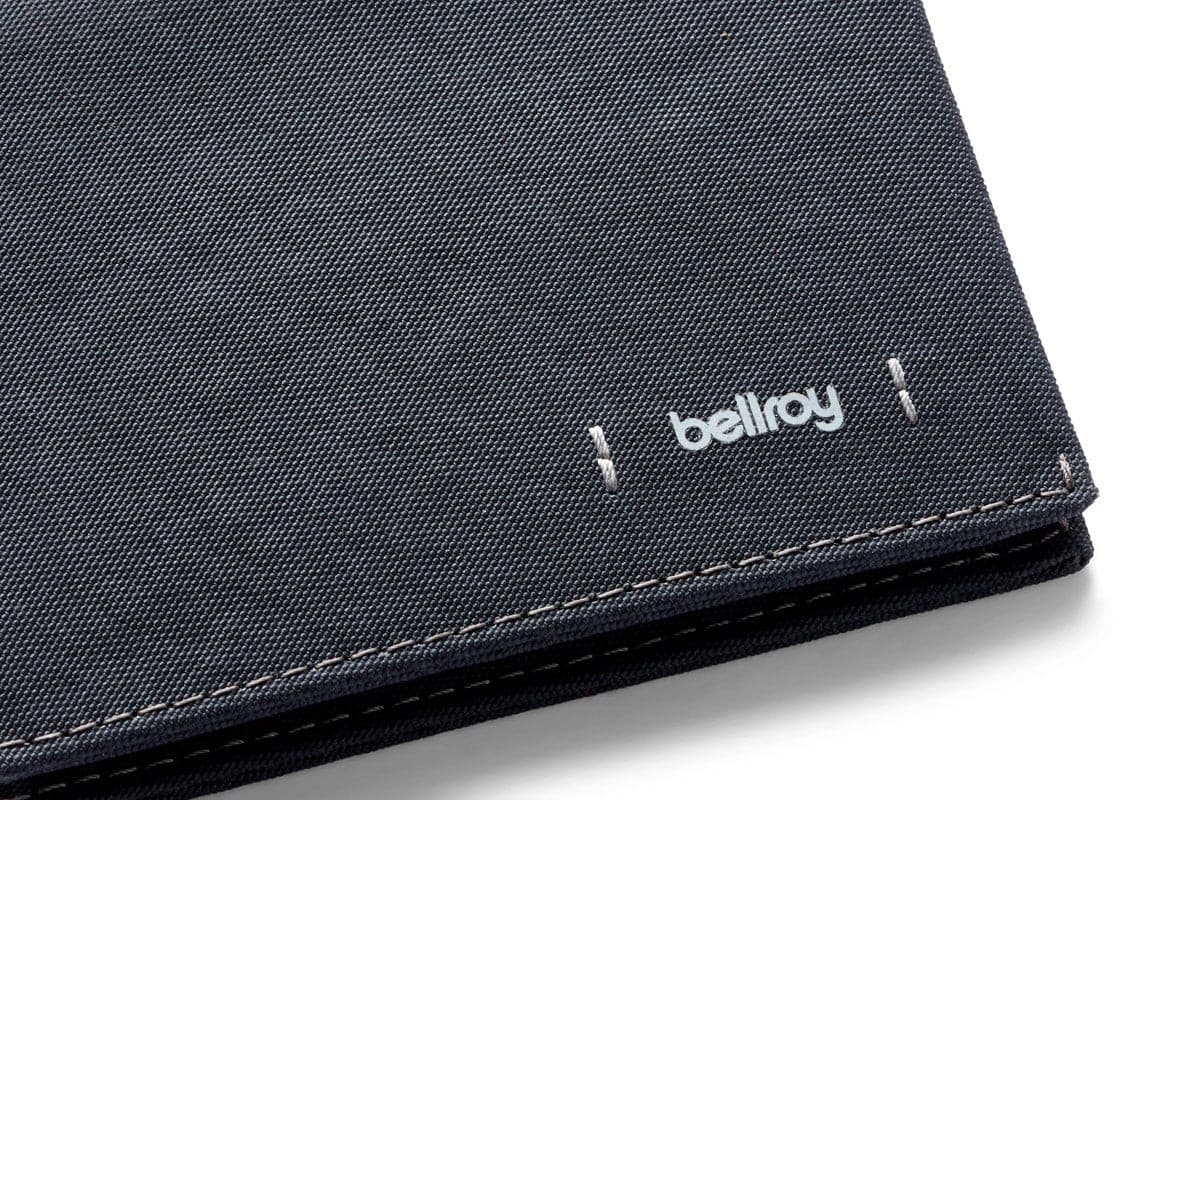 Slim Sleeve Wallet - Woven (RFID✔️) Bellroy Wallet Suburban.